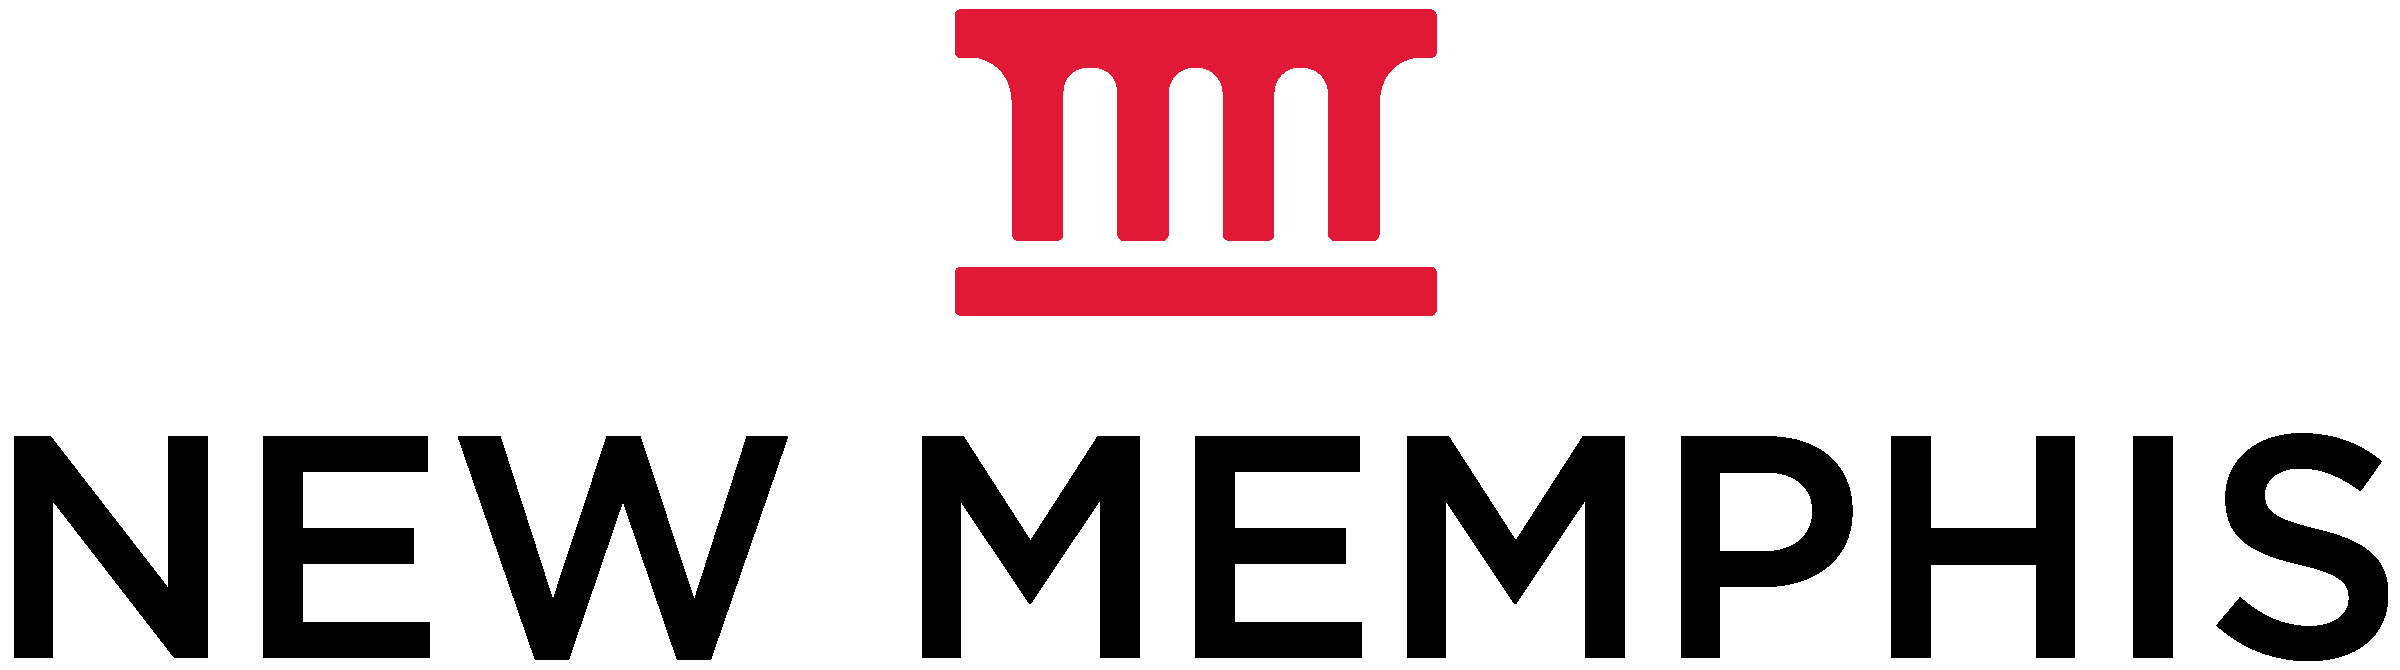 Memphis Logo - Homepage - New Memphis